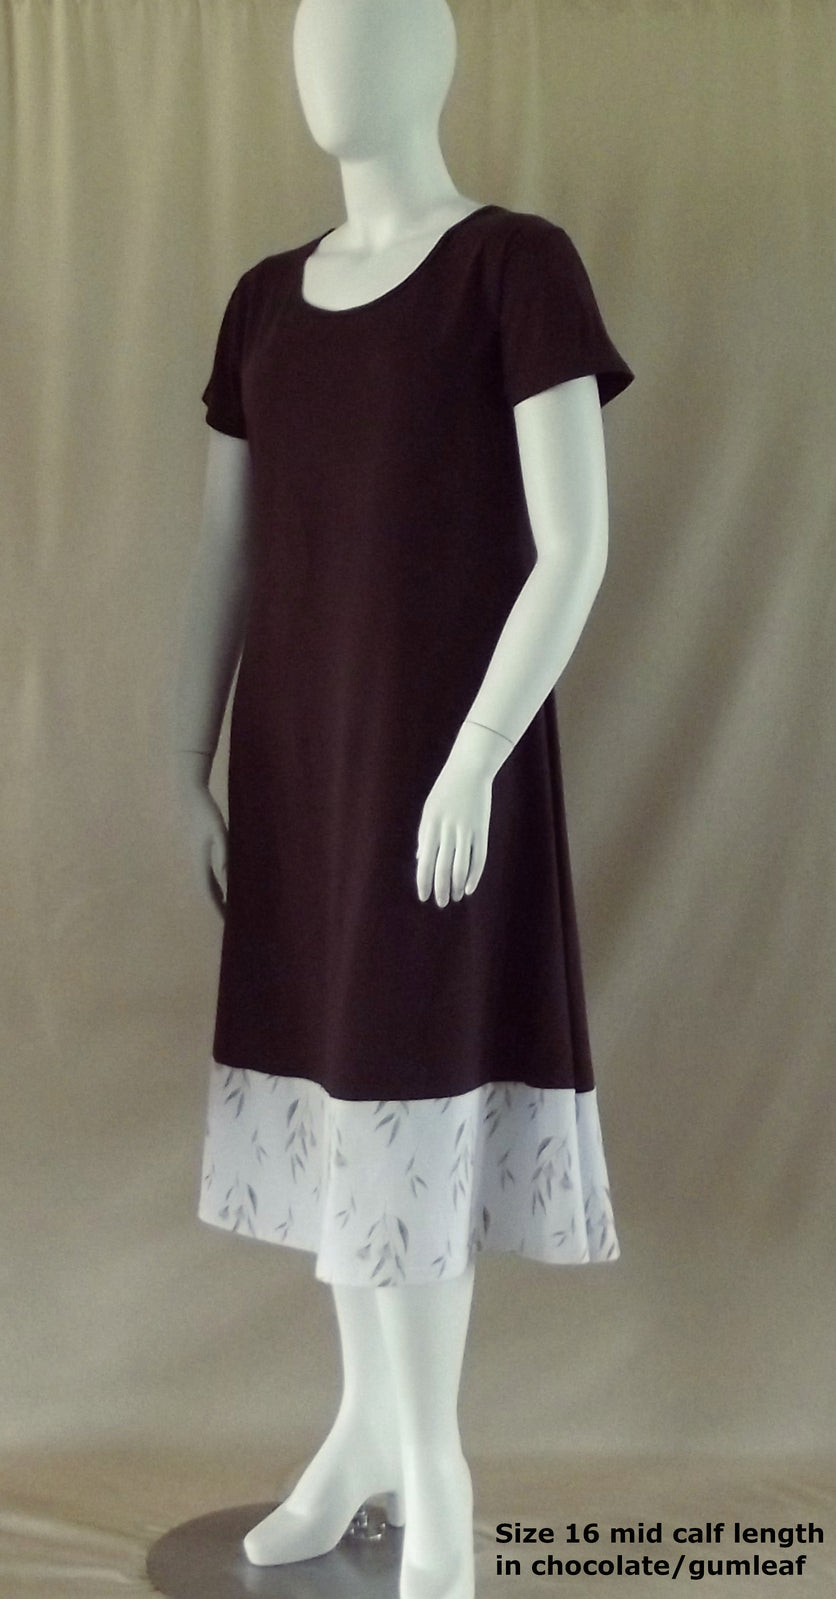 Plus size brown short sleeve cotton dress with gumleaf hem detail